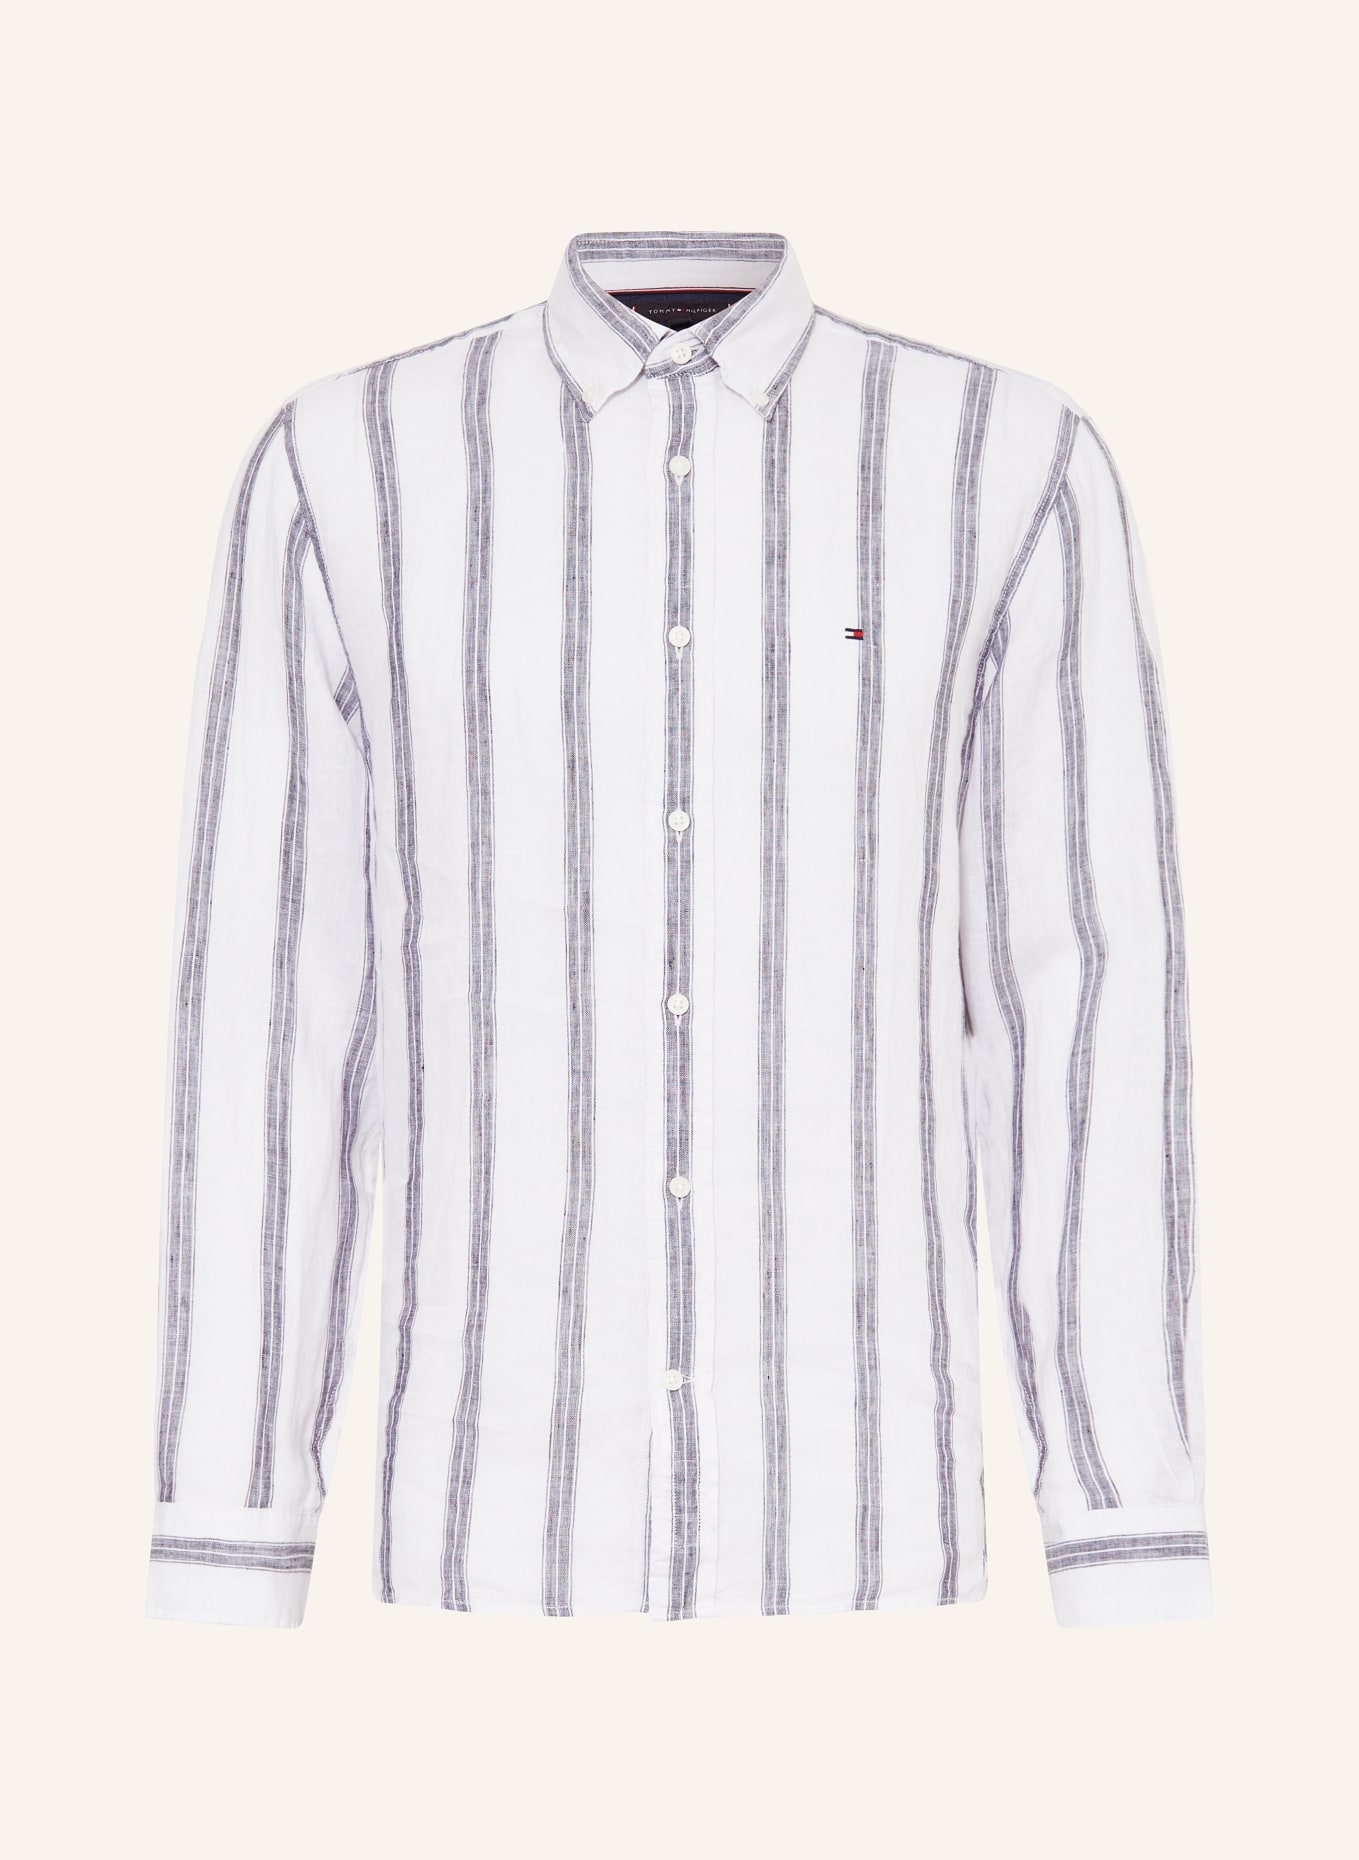 TOMMY HILFIGER Leinenhemd Regular Fit, Farbe: WEISS/ DUNKELBLAU (Bild 1)